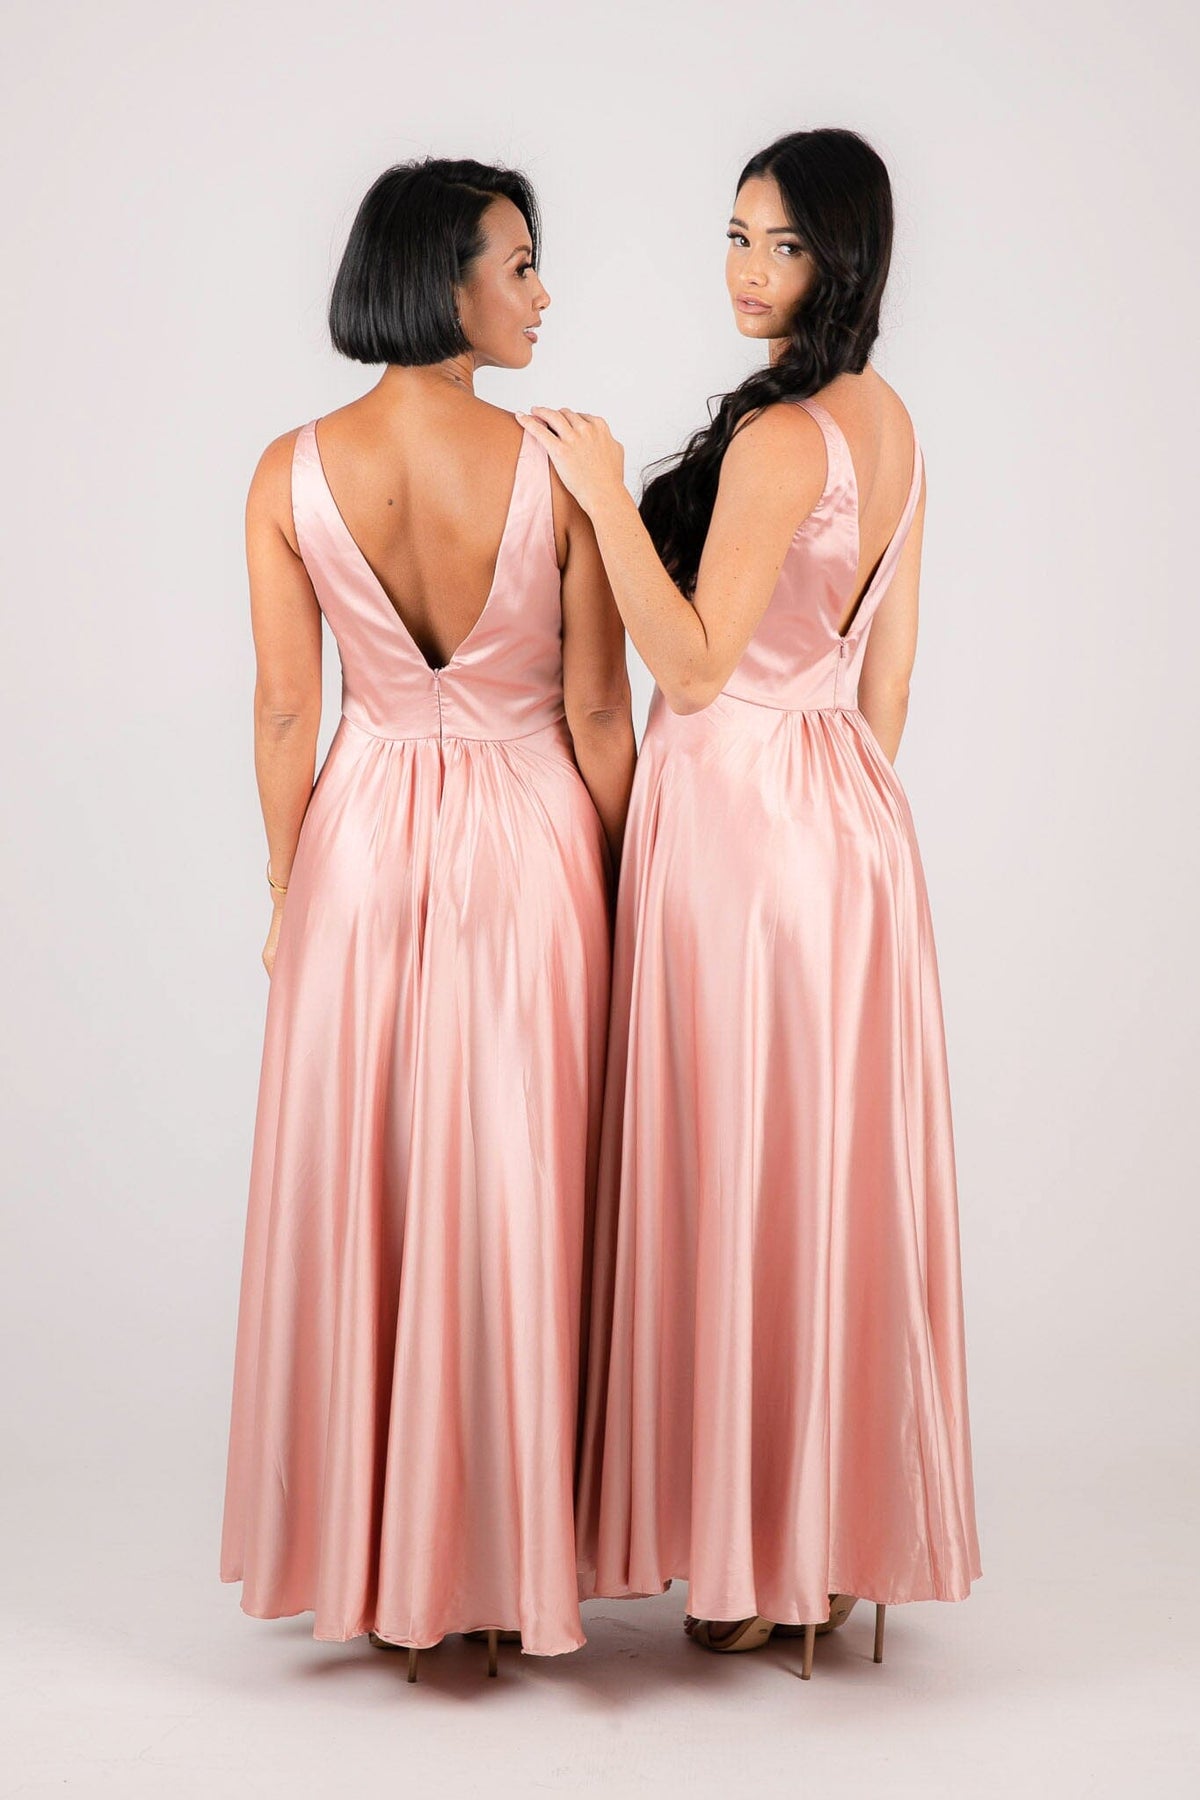 Open V Back Design of Light Pink Bridesmaid Satin A-line Maxi Dress with V Neckline, Gathered Detail and V Open Back